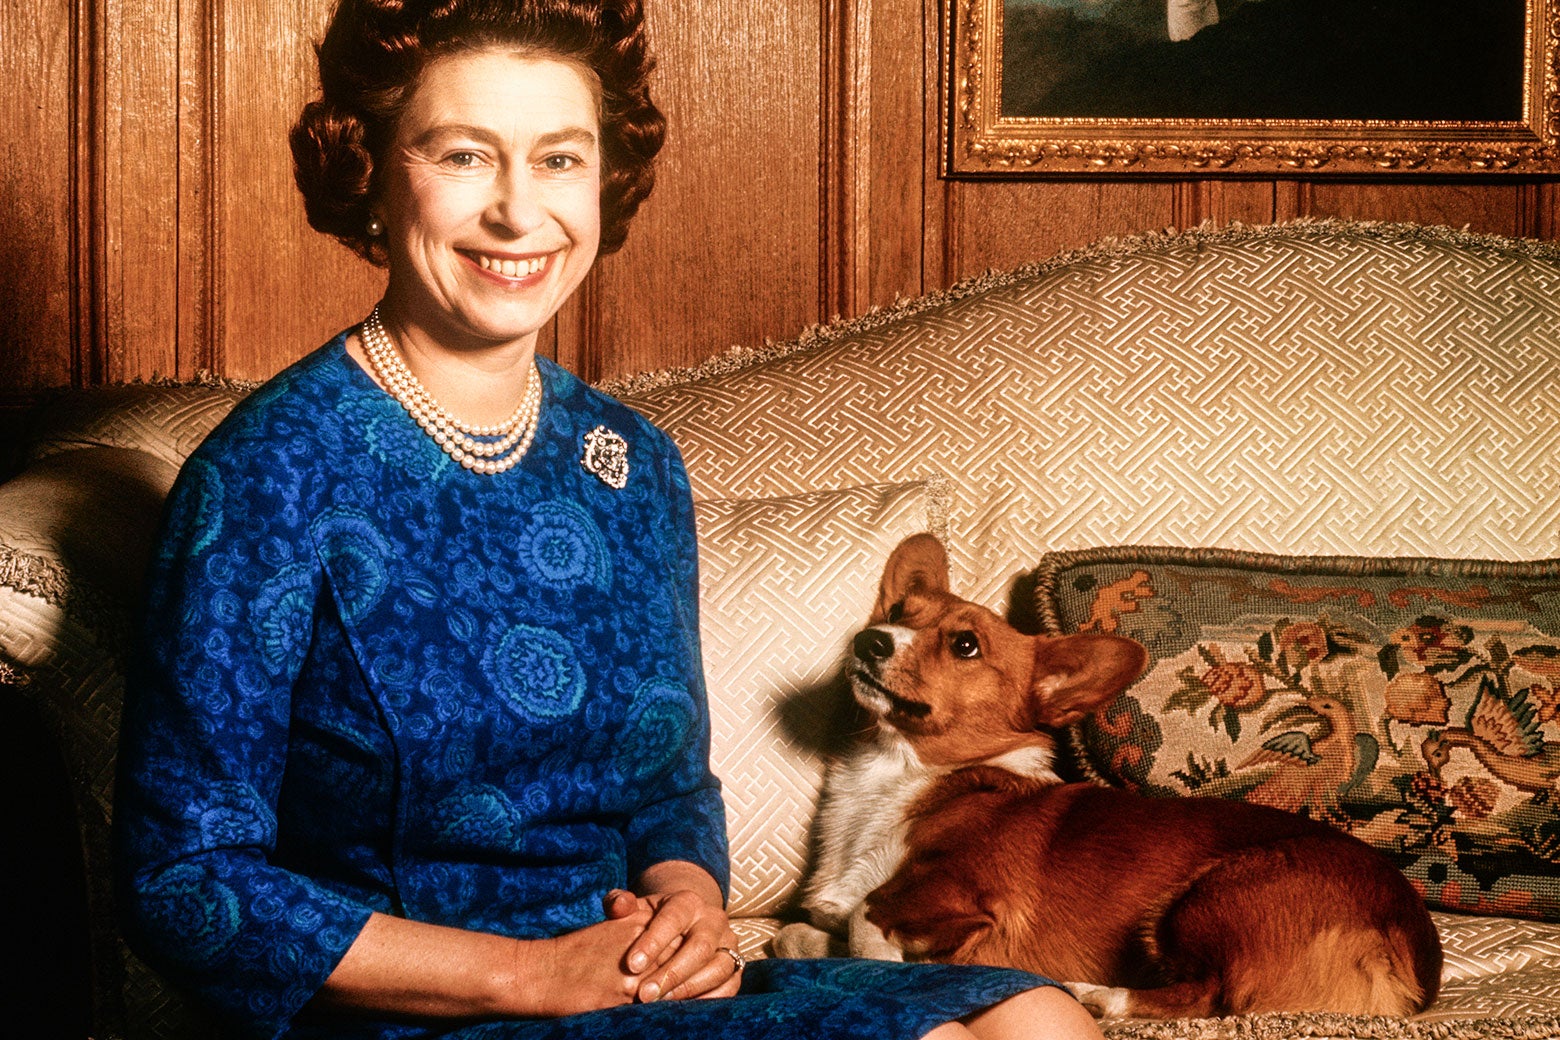 Queen Elizabeth with a corgi dog.